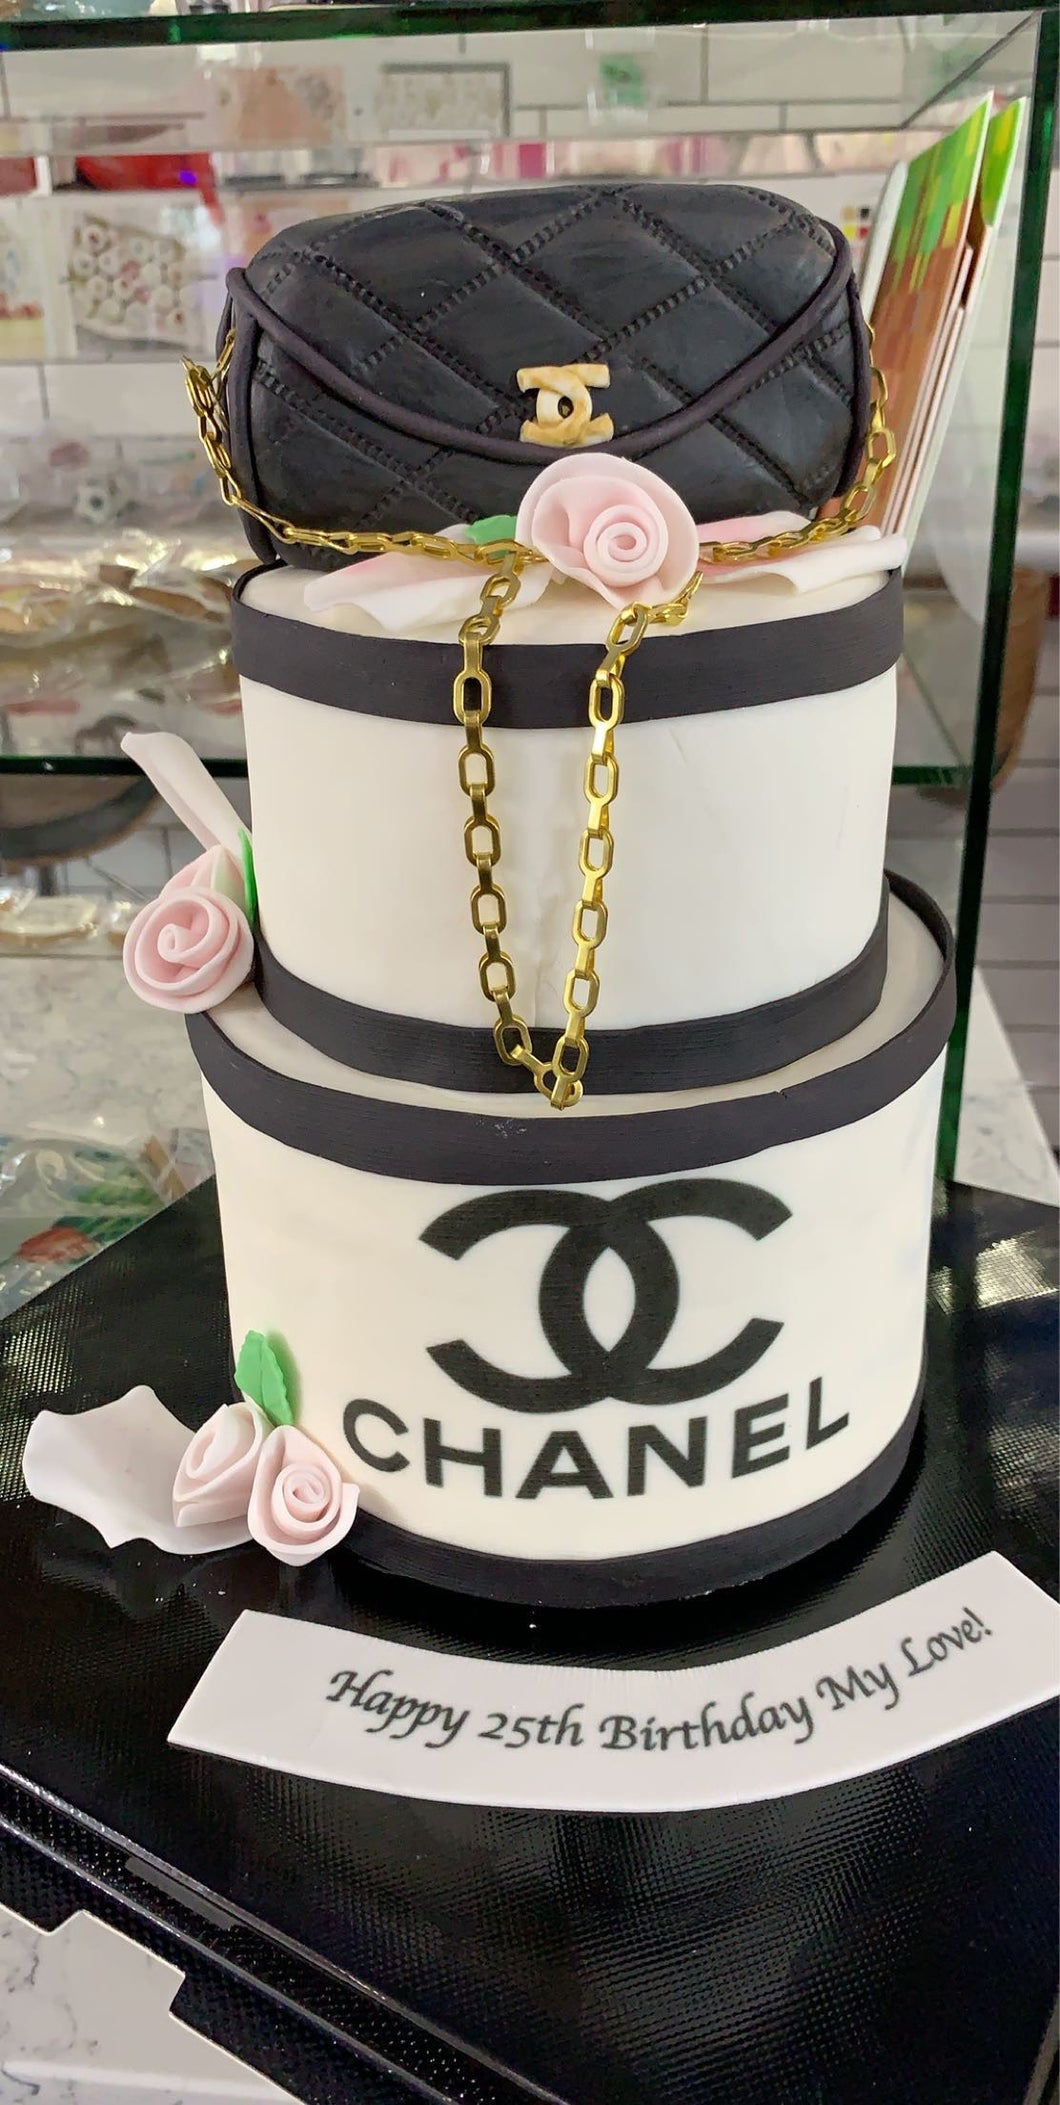 Chanel Logo Cake